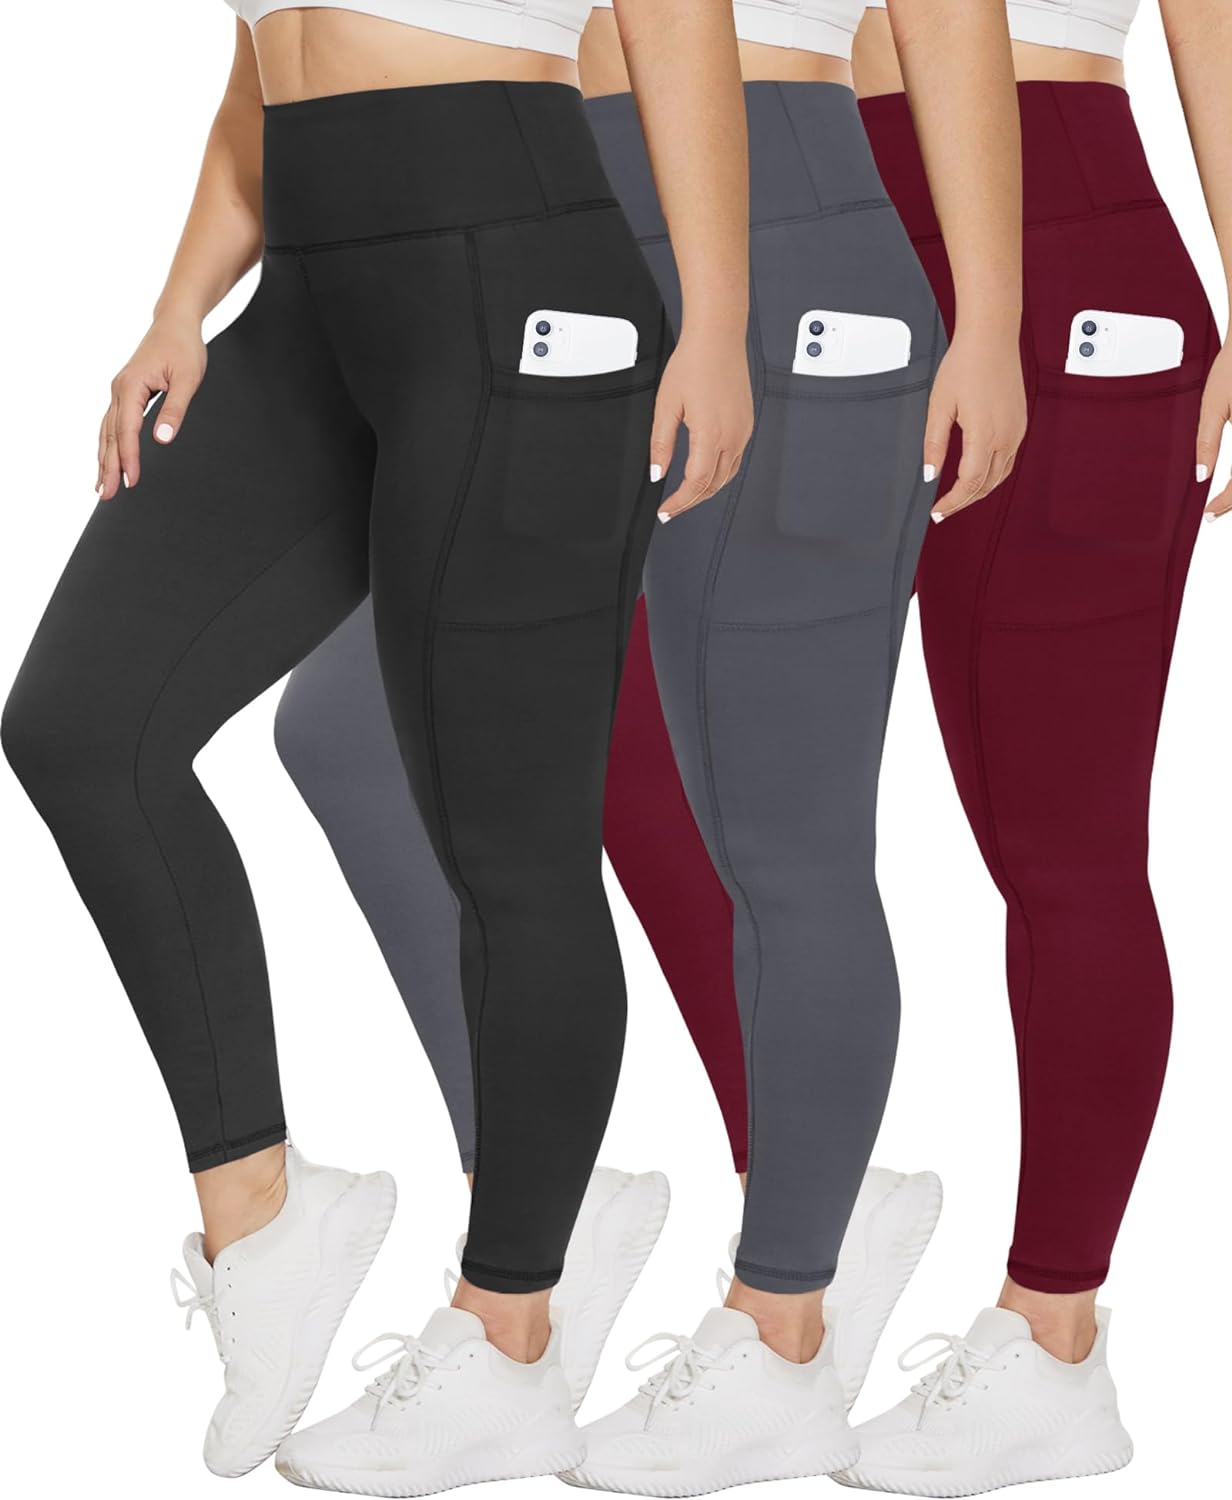 TNNZEET 3 Pack Plus Size Leggings with Pockets, Women’s Black Maternity Yoga Pants